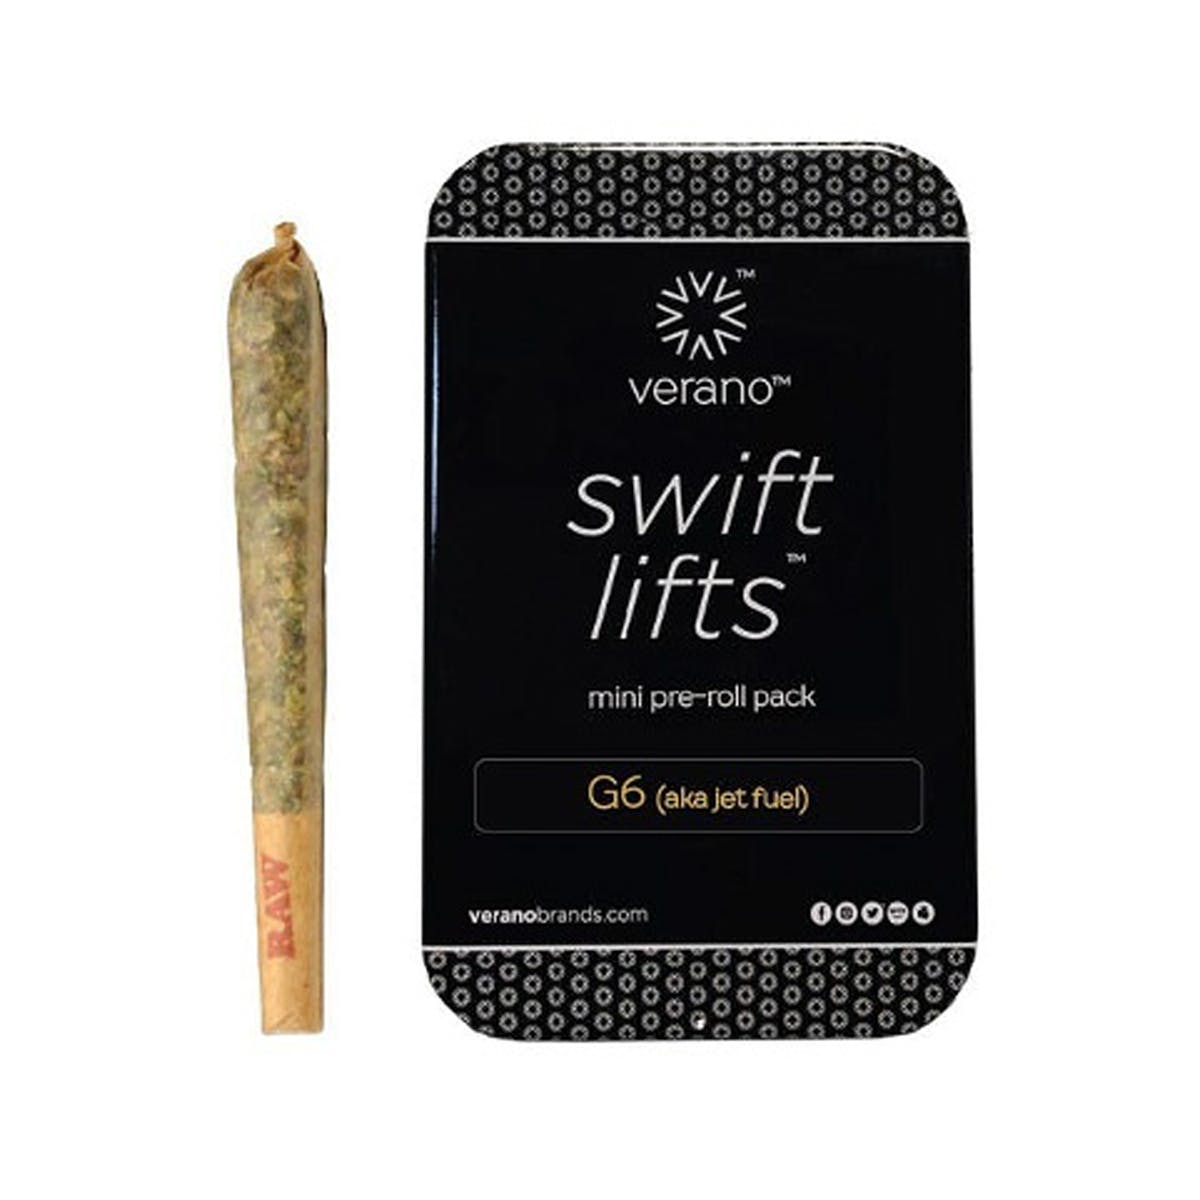 marijuana-dispensaries-pure-life-wellness-in-baltimore-swift-liftsa-c2-84c-mini-pre-roll-pack-g6-jet-fuel